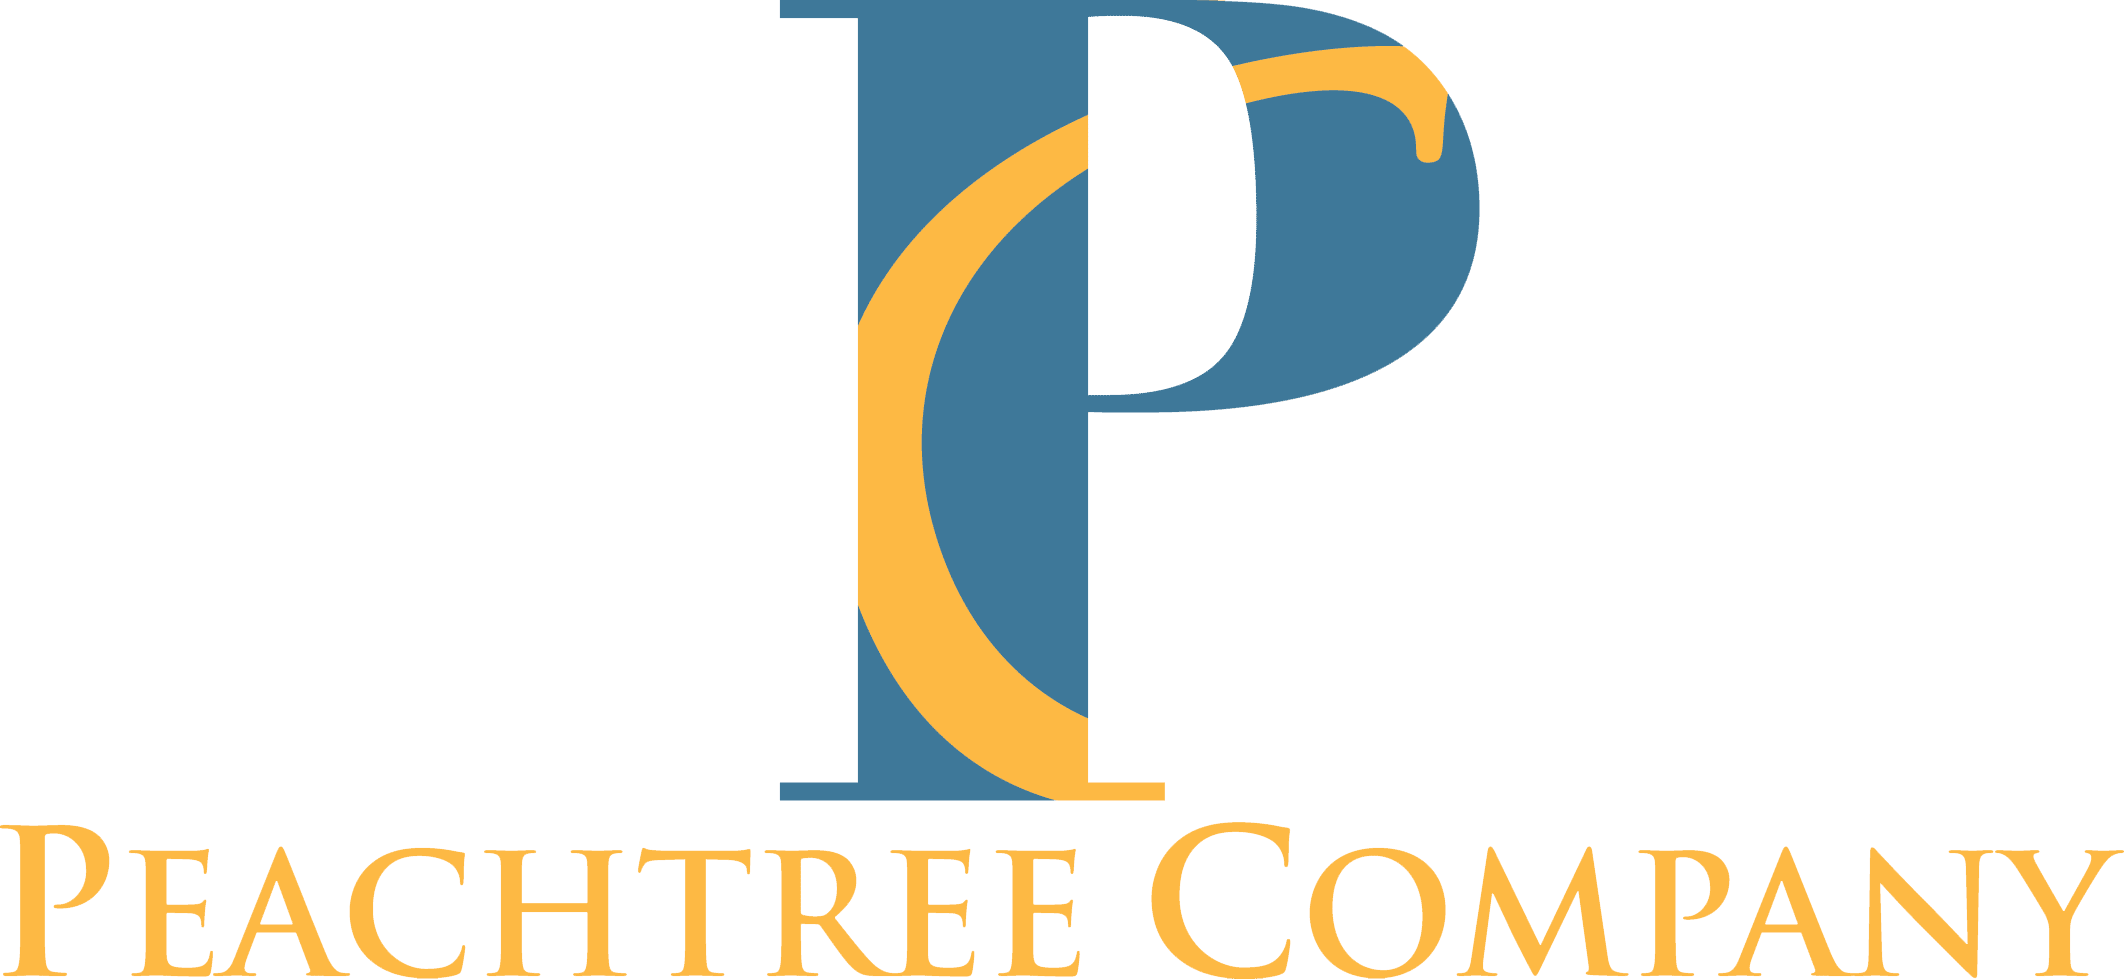 Peachtree Logo - Welcome to Peachtree! | Peachtree Company